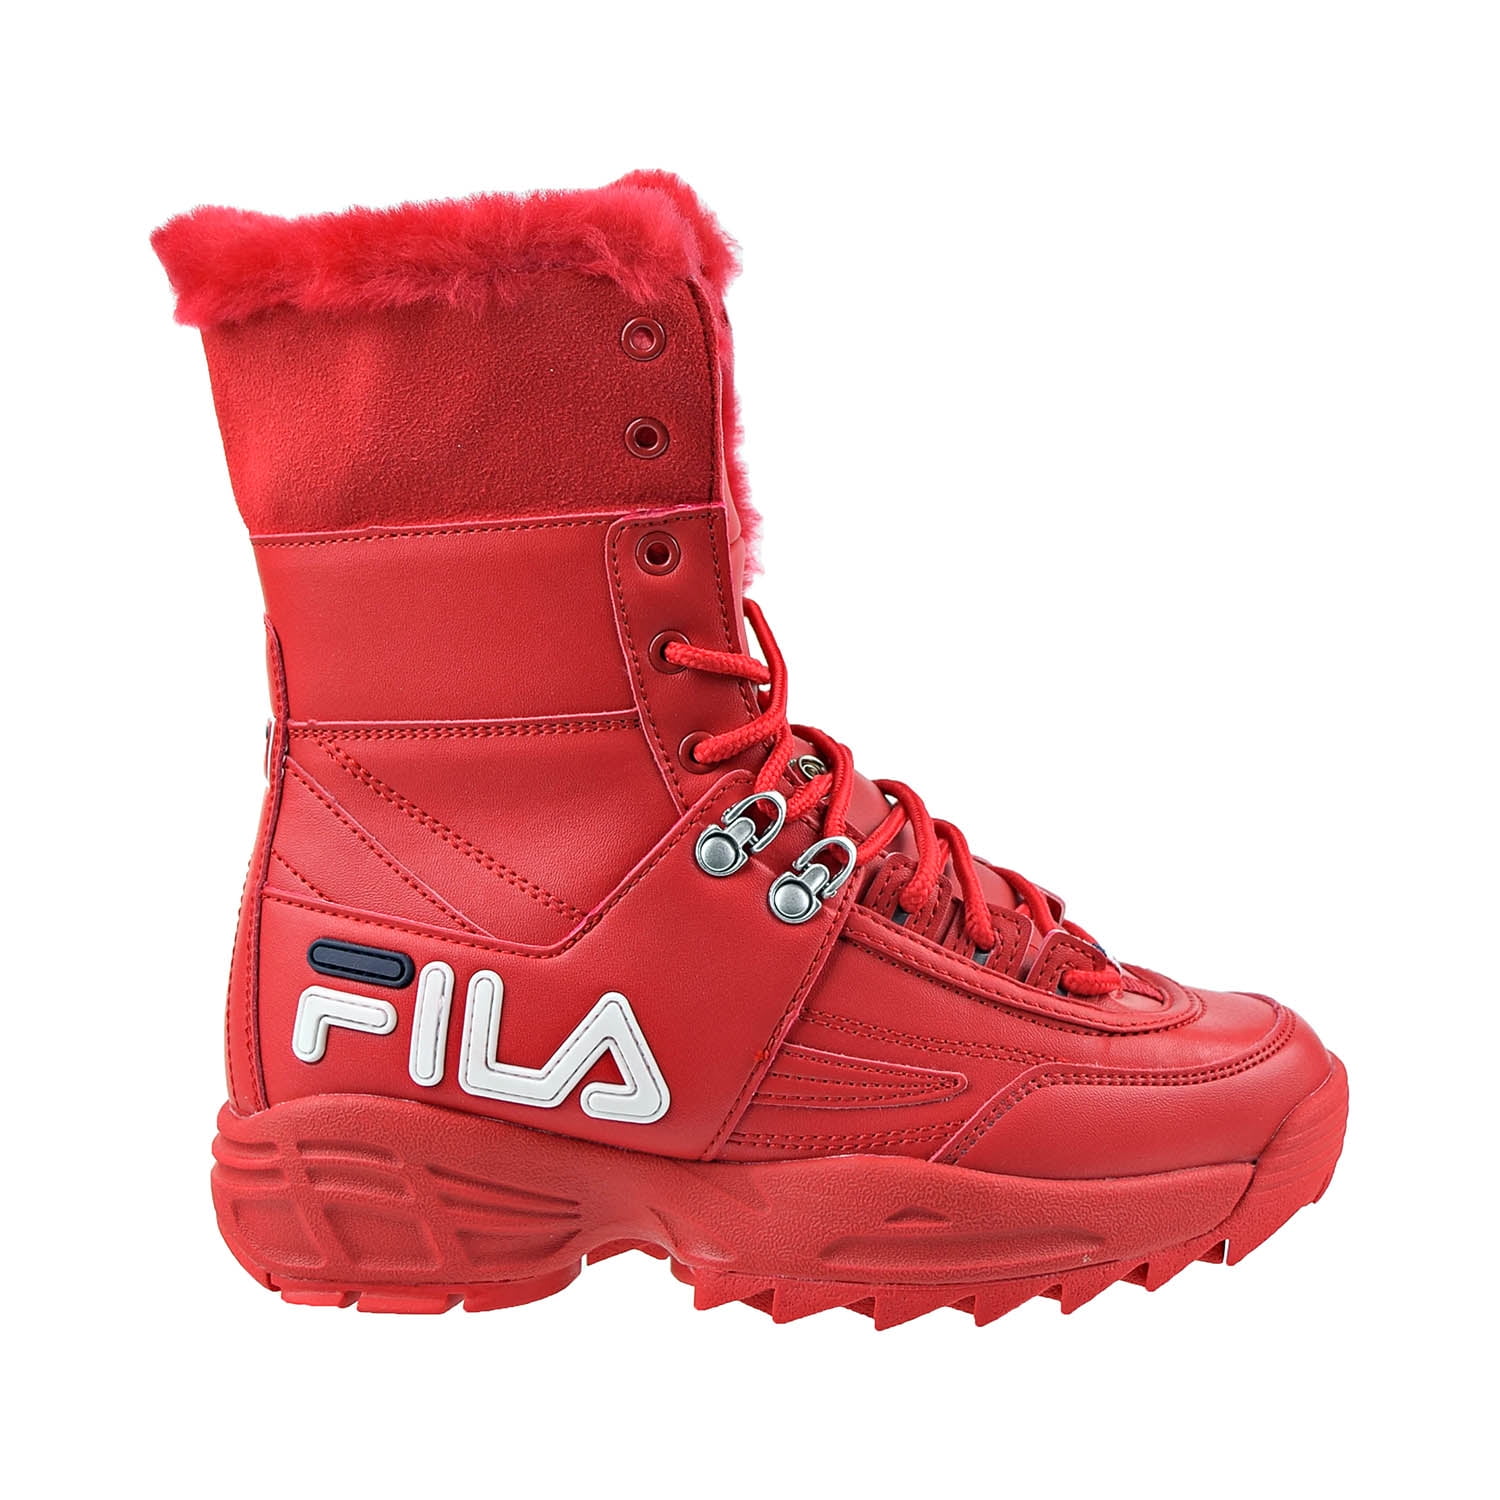 Fila Disruptor Fur Top Women's Boots Fila Red-Fila Navy-White 5hm00560 ...